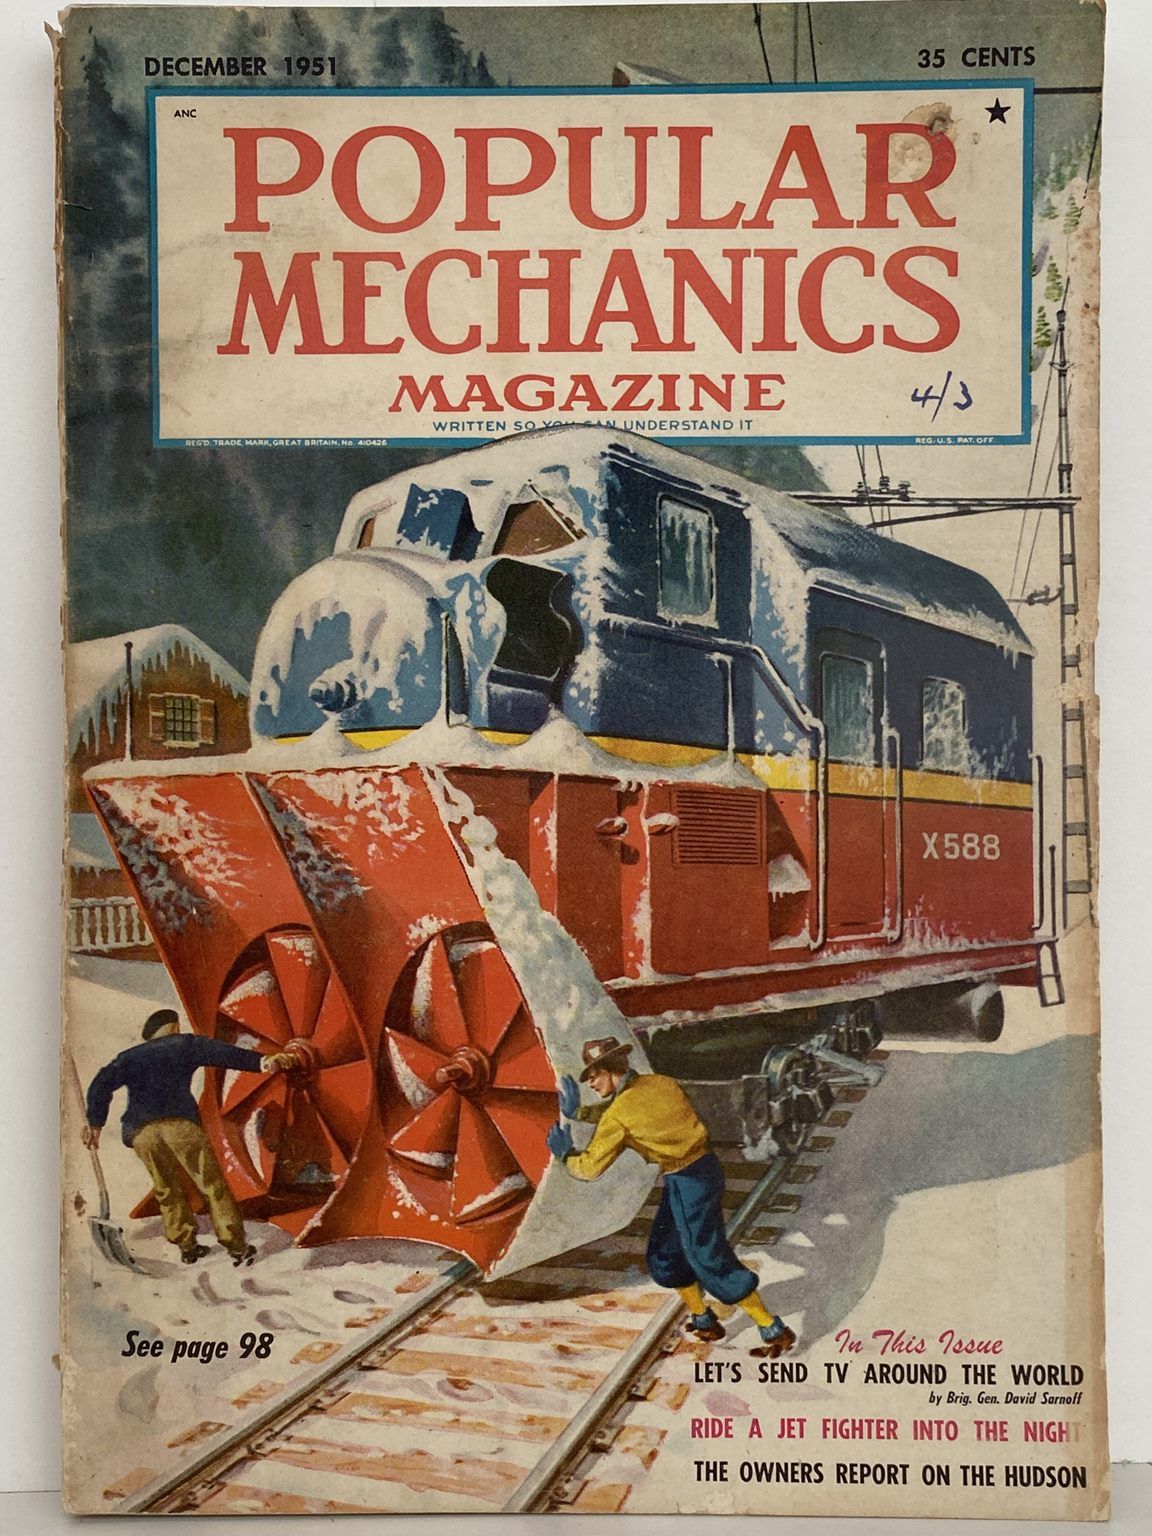 VINTAGE MAGAZINE: Popular Mechanics - Vol. 96, No. 6 - December 1951